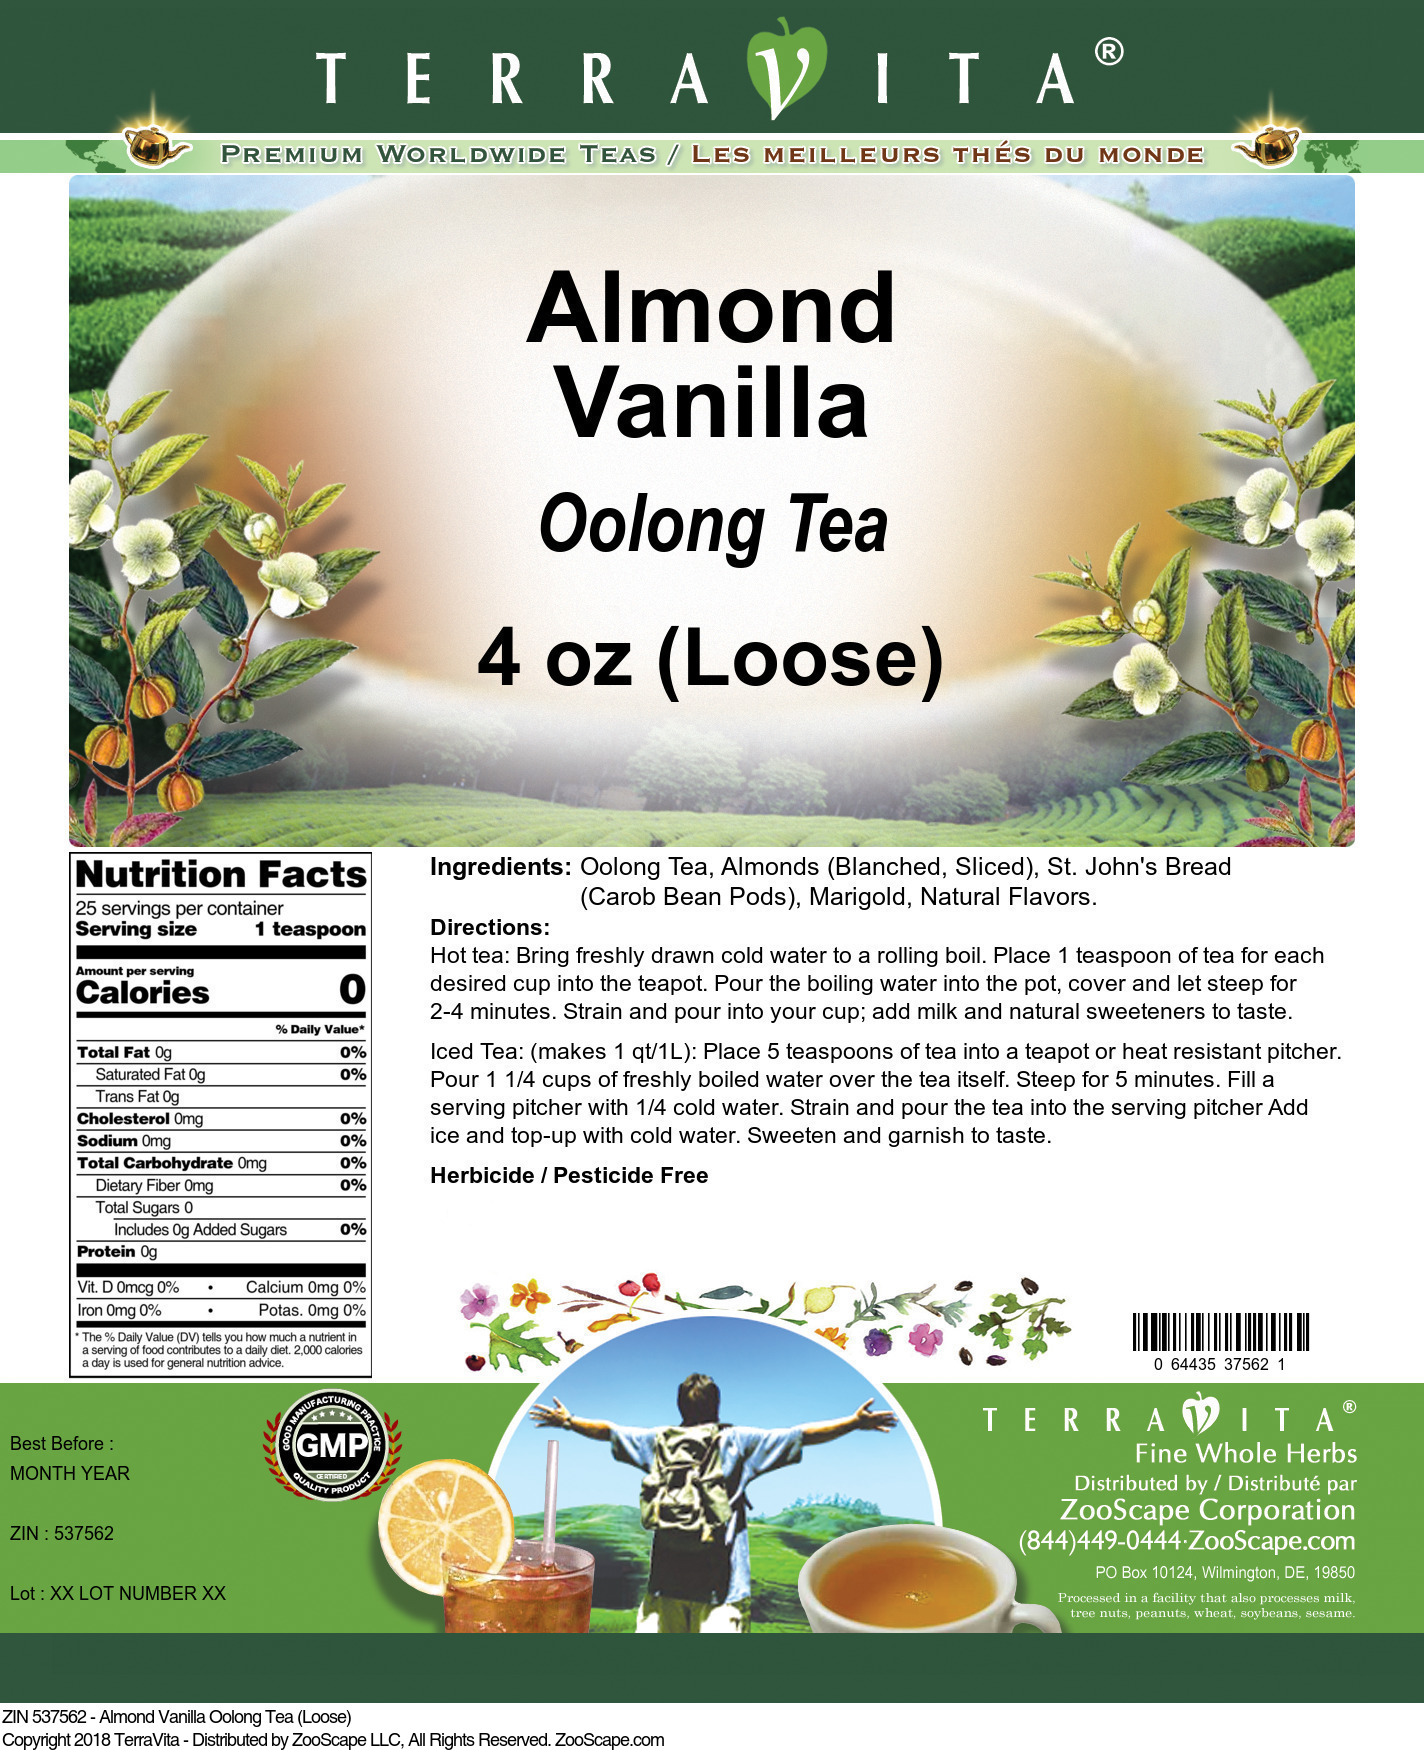 Almond Vanilla Oolong Tea (Loose) - Label